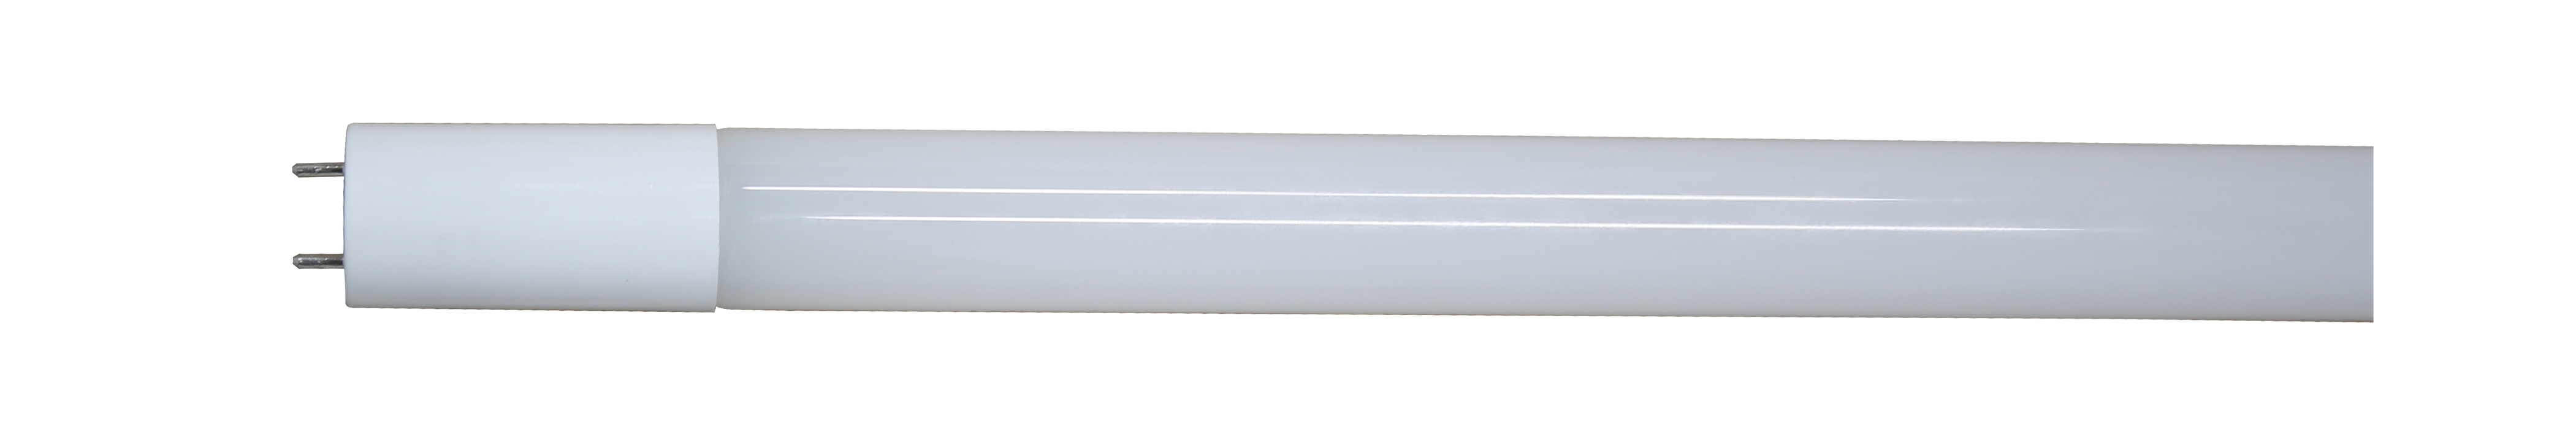 Light Efficient Design 4 Foot 18W T8 Single End Power 5000K (LED-18T8-850SE48-G3)